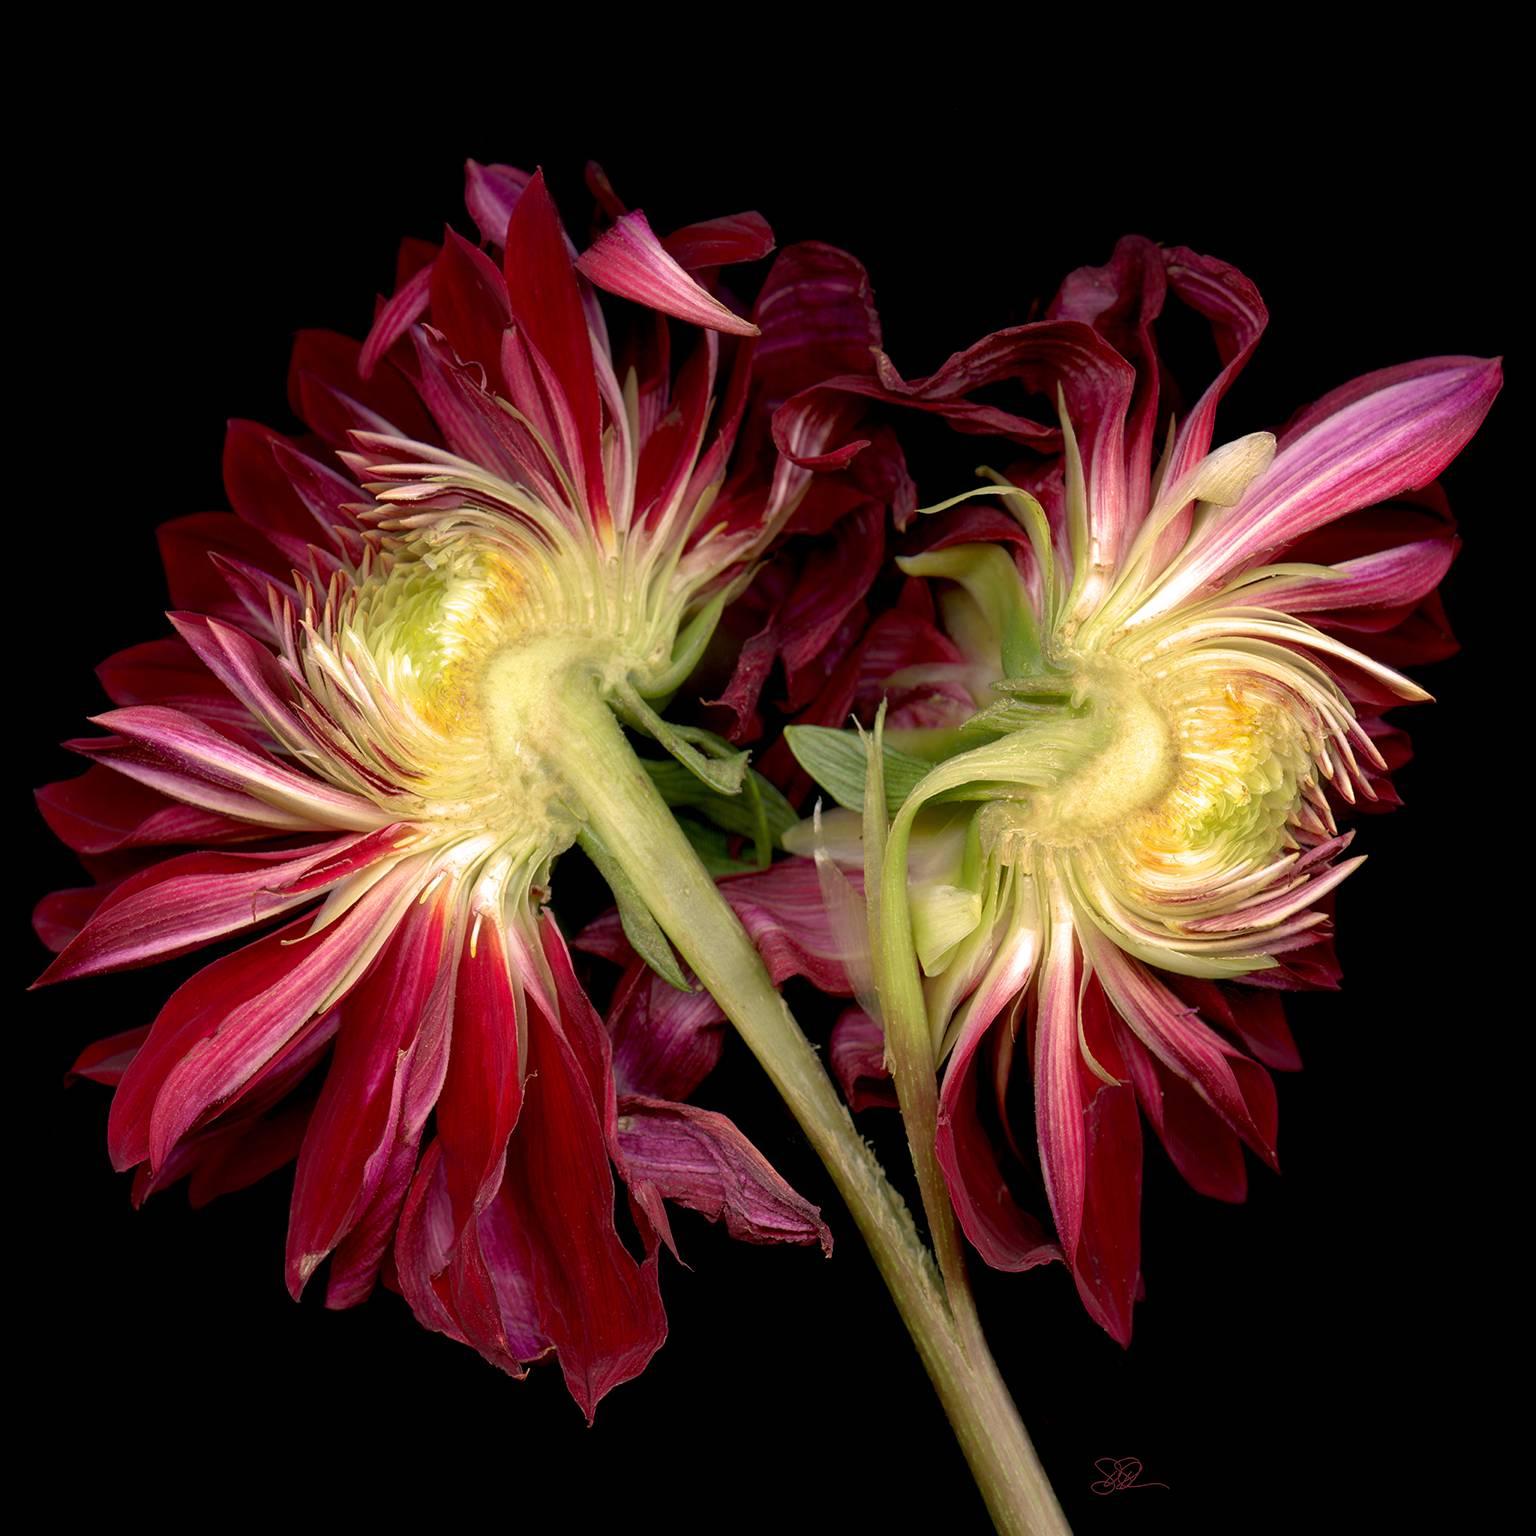 Debb VanDelinder Still-Life Photograph - Separation Anxiety - a split red flower